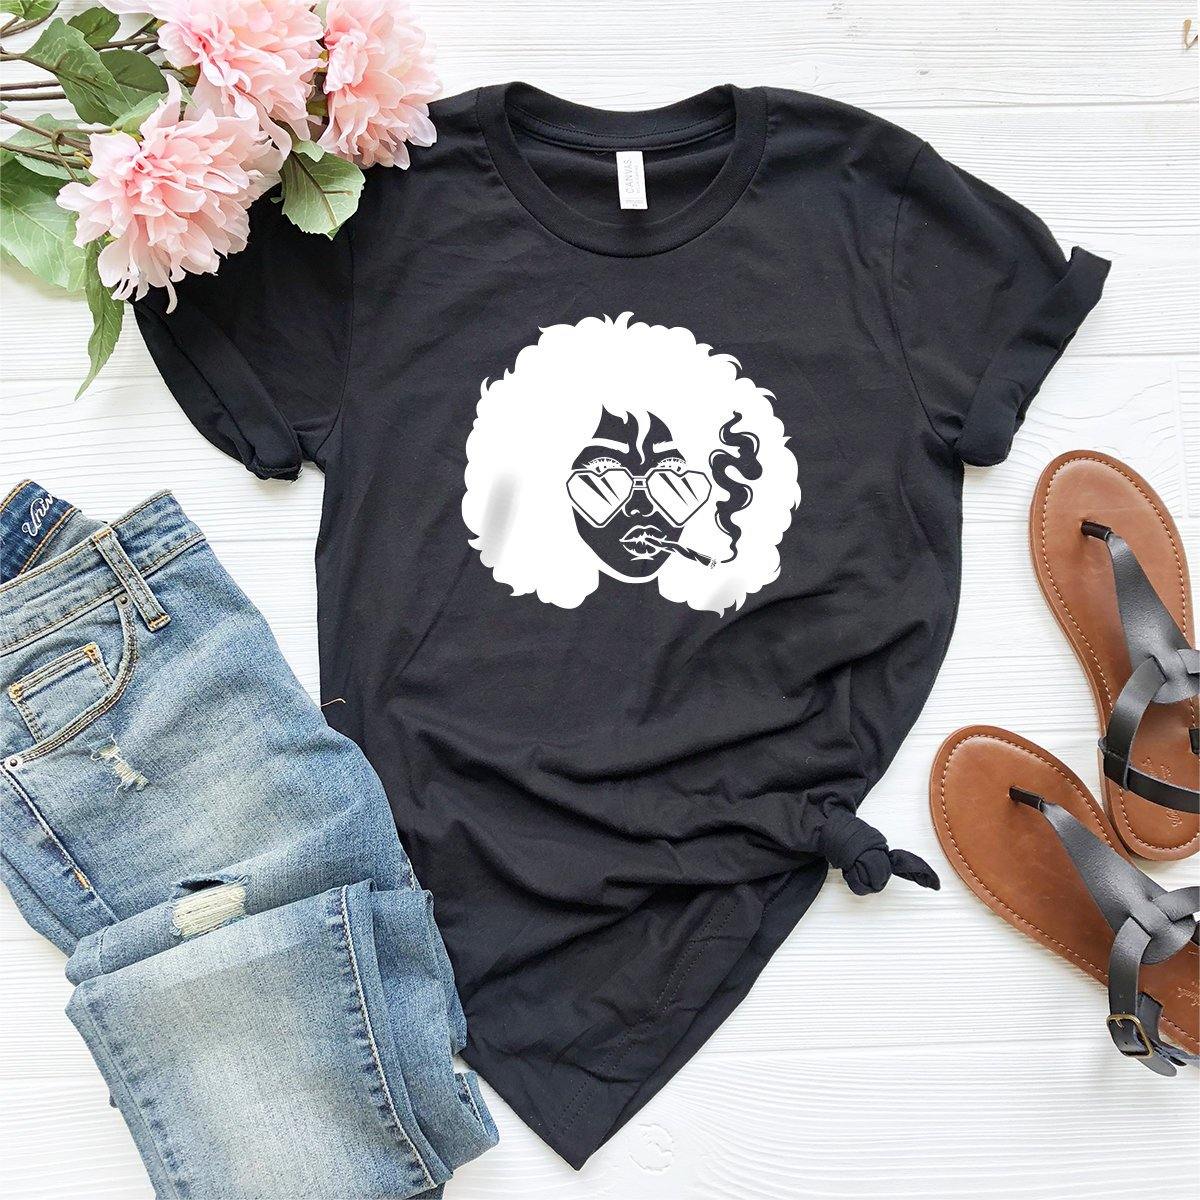 Afro Girl Smoking Shirt, Weed Shirt, Afro Girl Shirt, Weed Tee, Funny Weed Shirt, Marijuana Shirt, Stoner Shirt, Cannabis Shirt, 420 Shirt - Fastdeliverytees.com